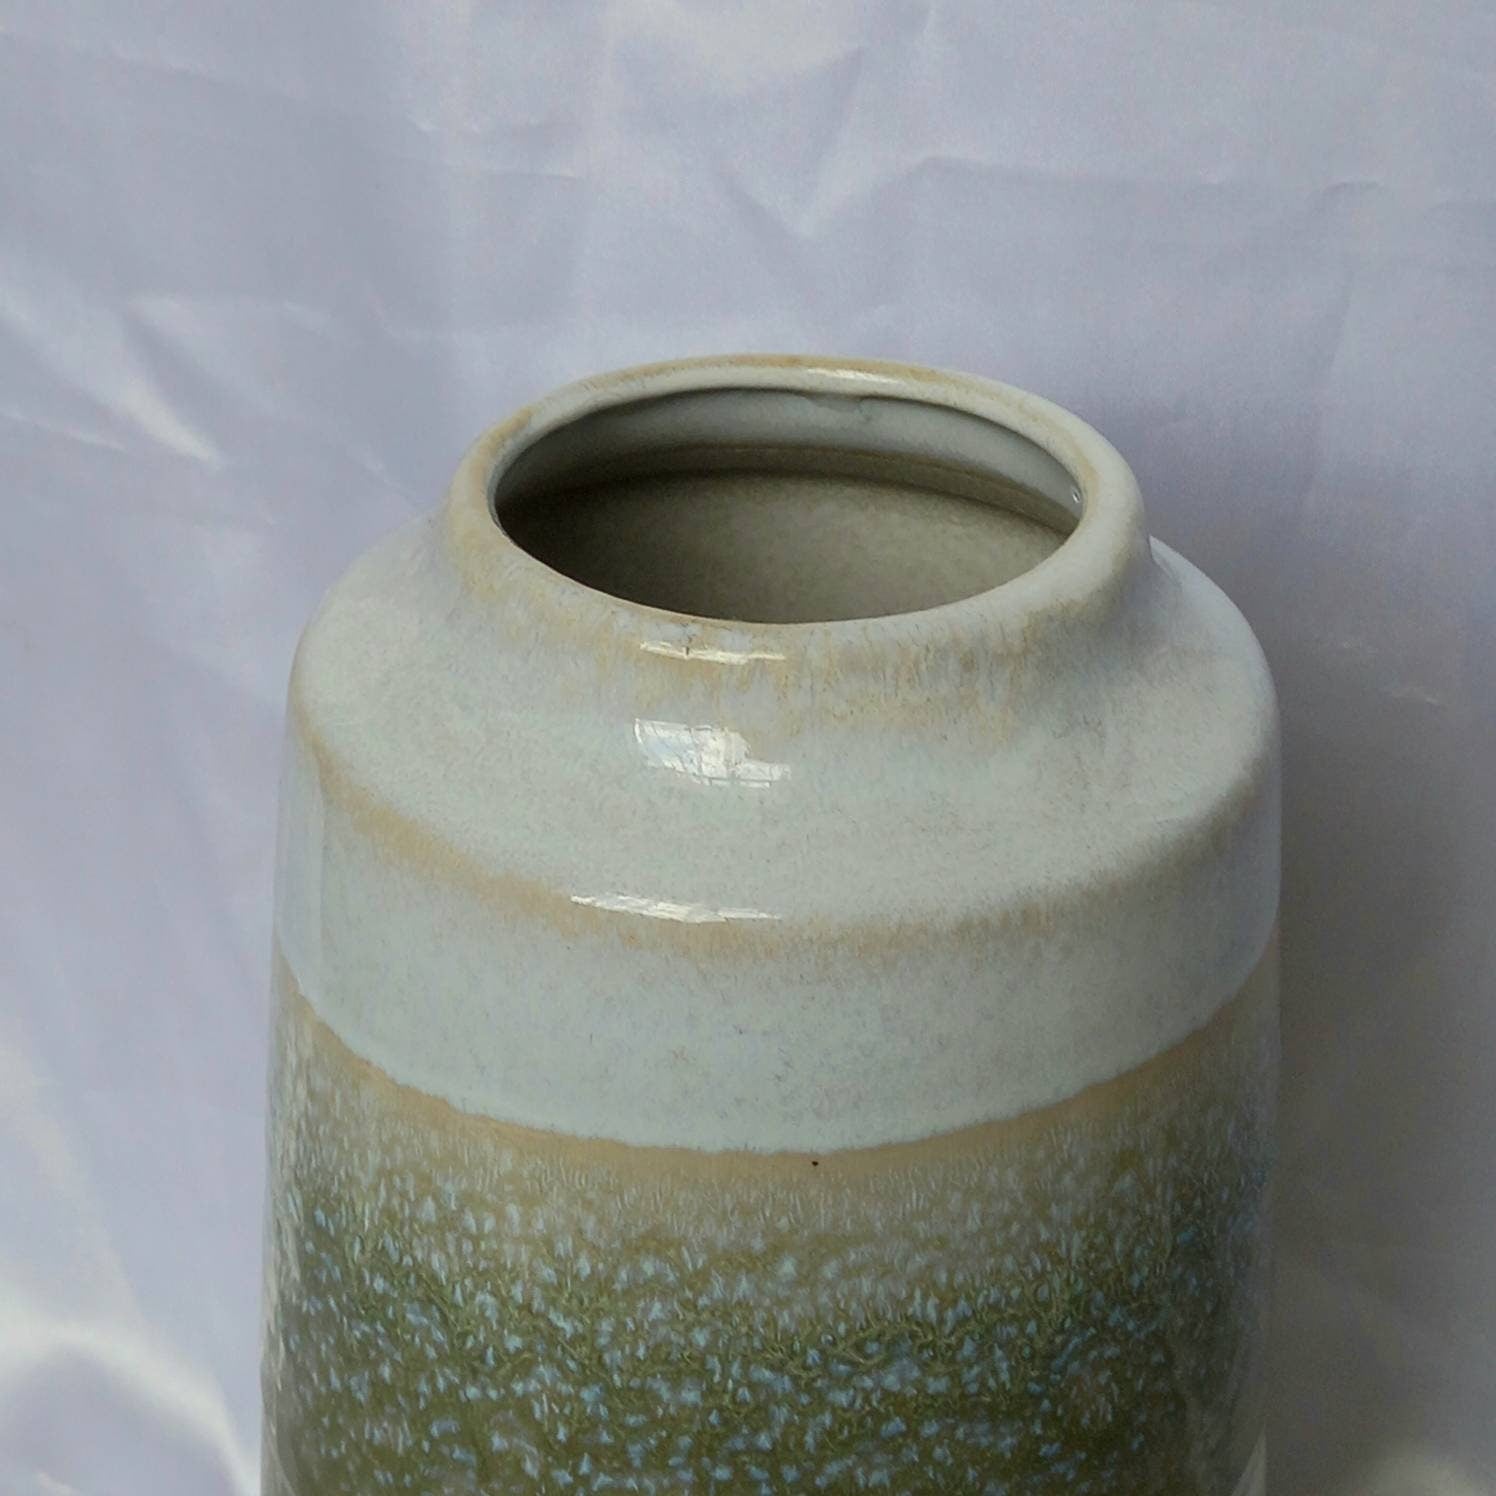 Reactive Glaze Ocean Ceramic Vases